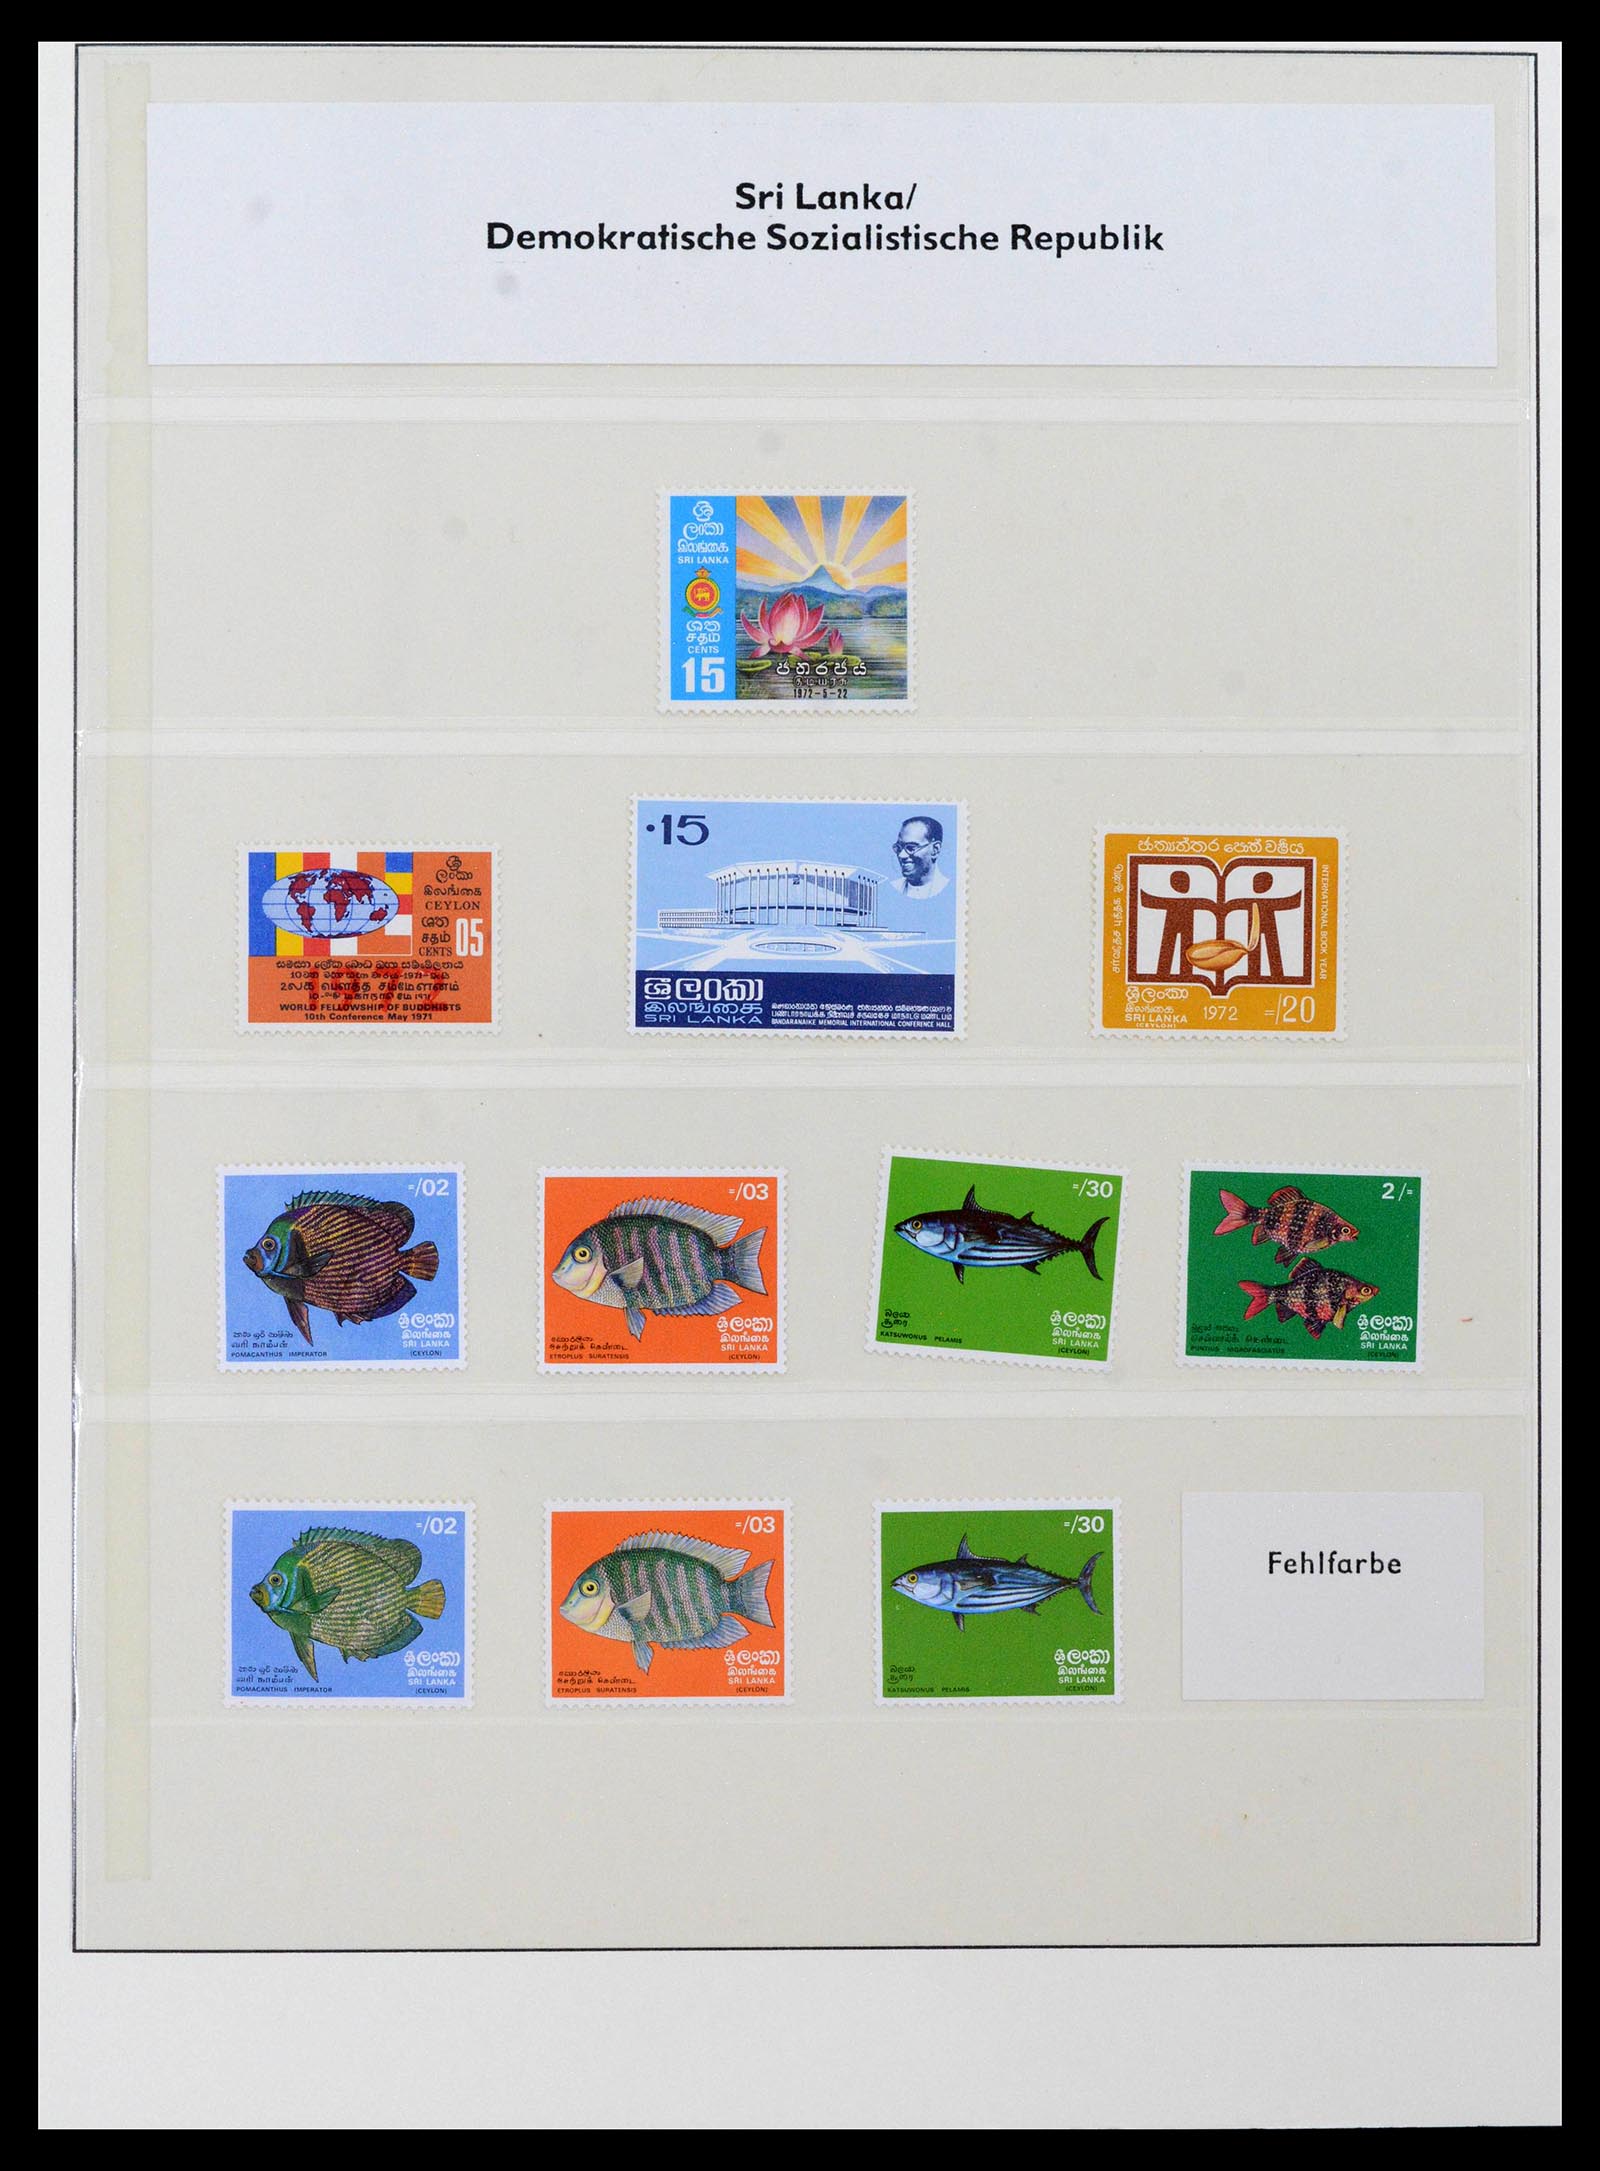 39003 0040 - Stamp collection 39003 Ceylon/Sri Lanka 1857-2003.